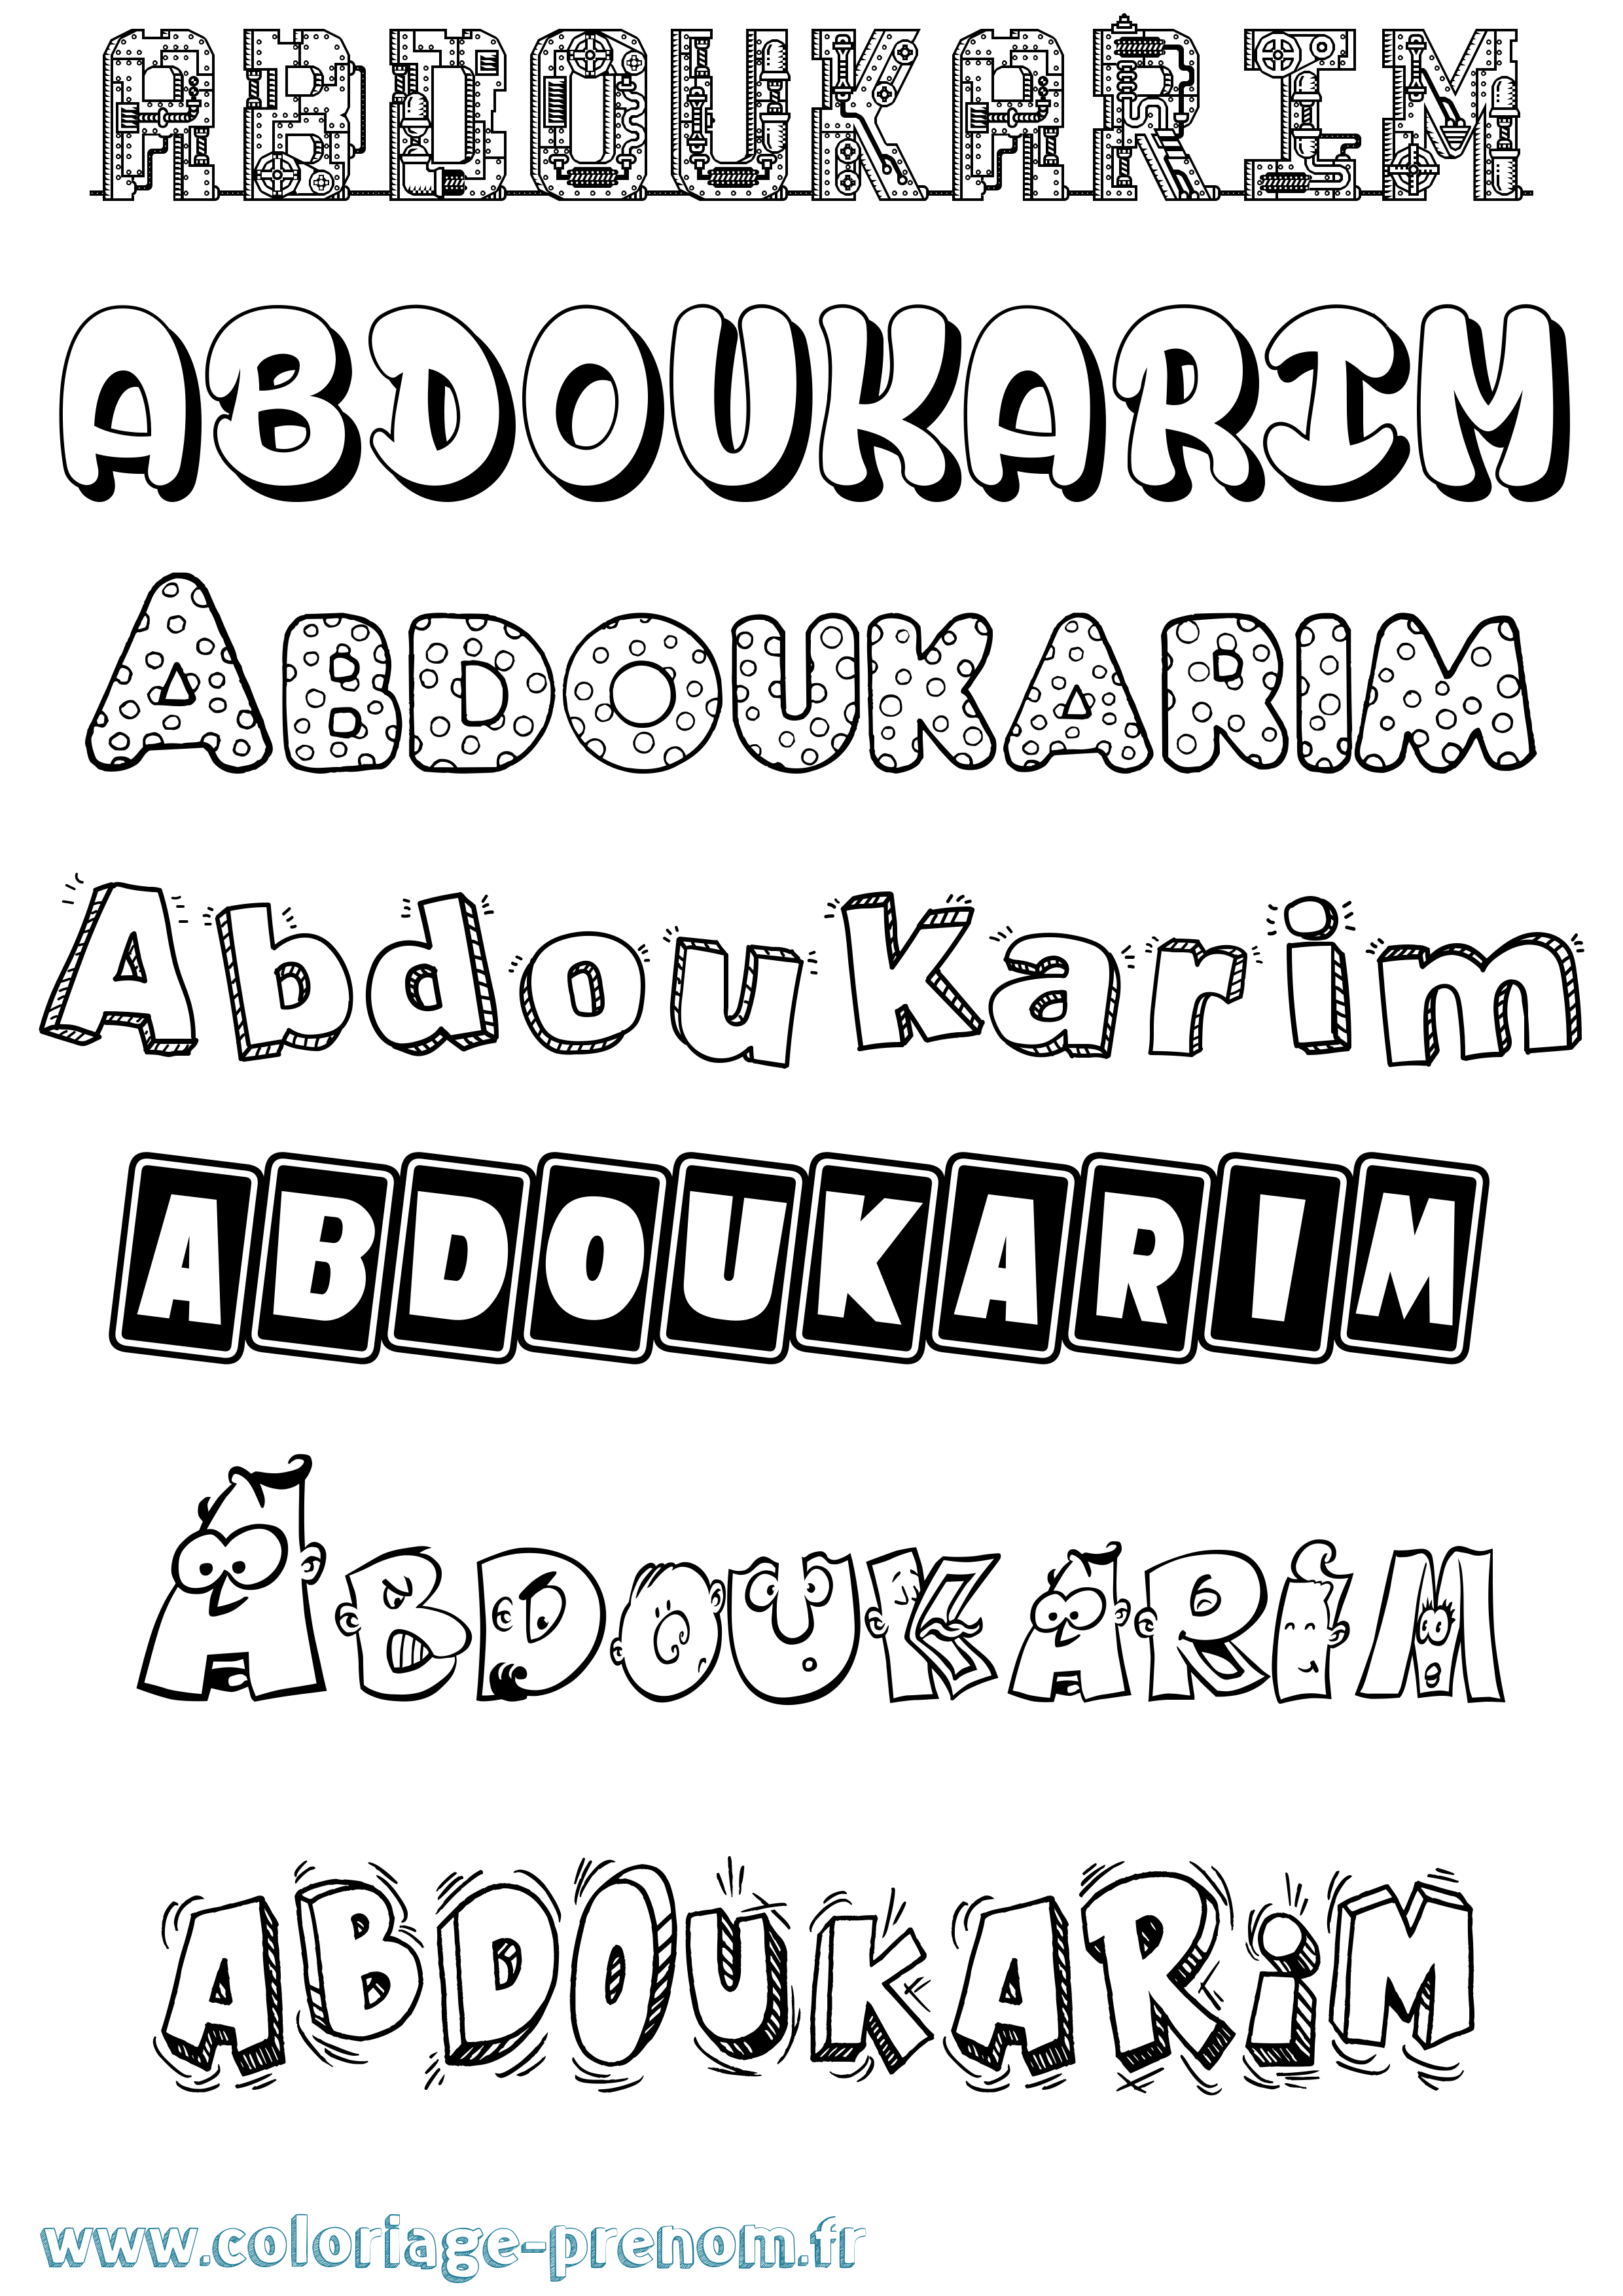 Coloriage prénom Abdoukarim Fun